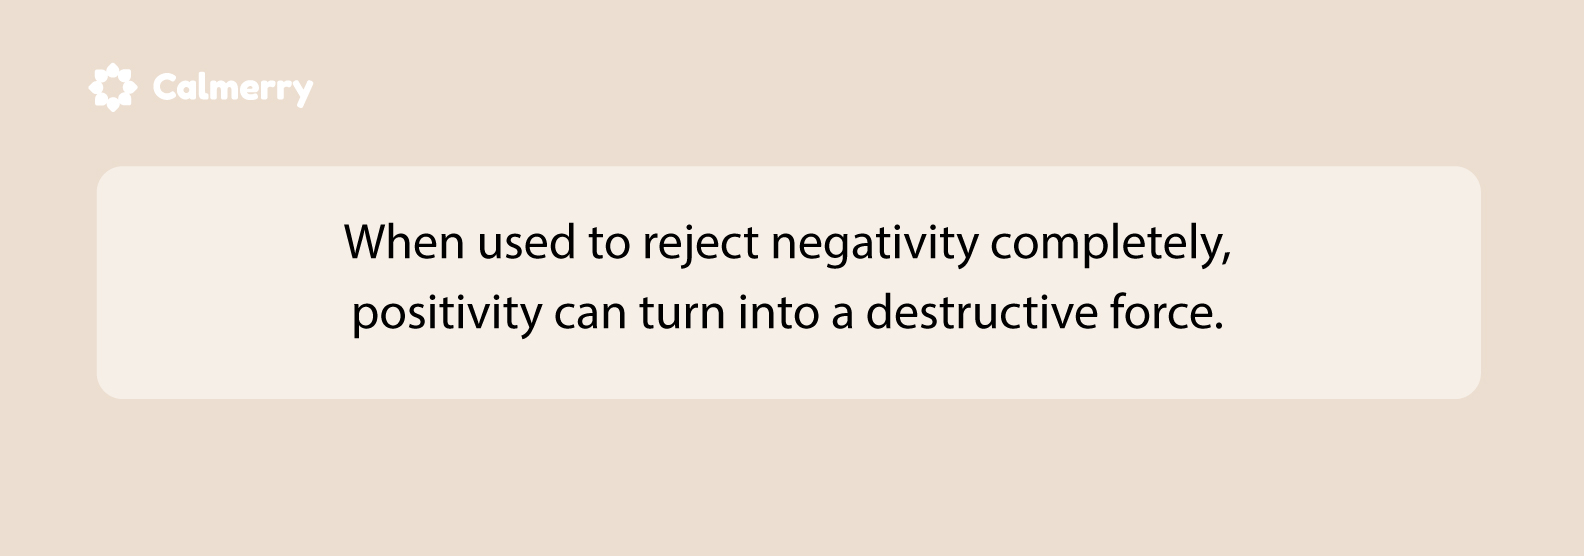 Toxic positivity can be destructive